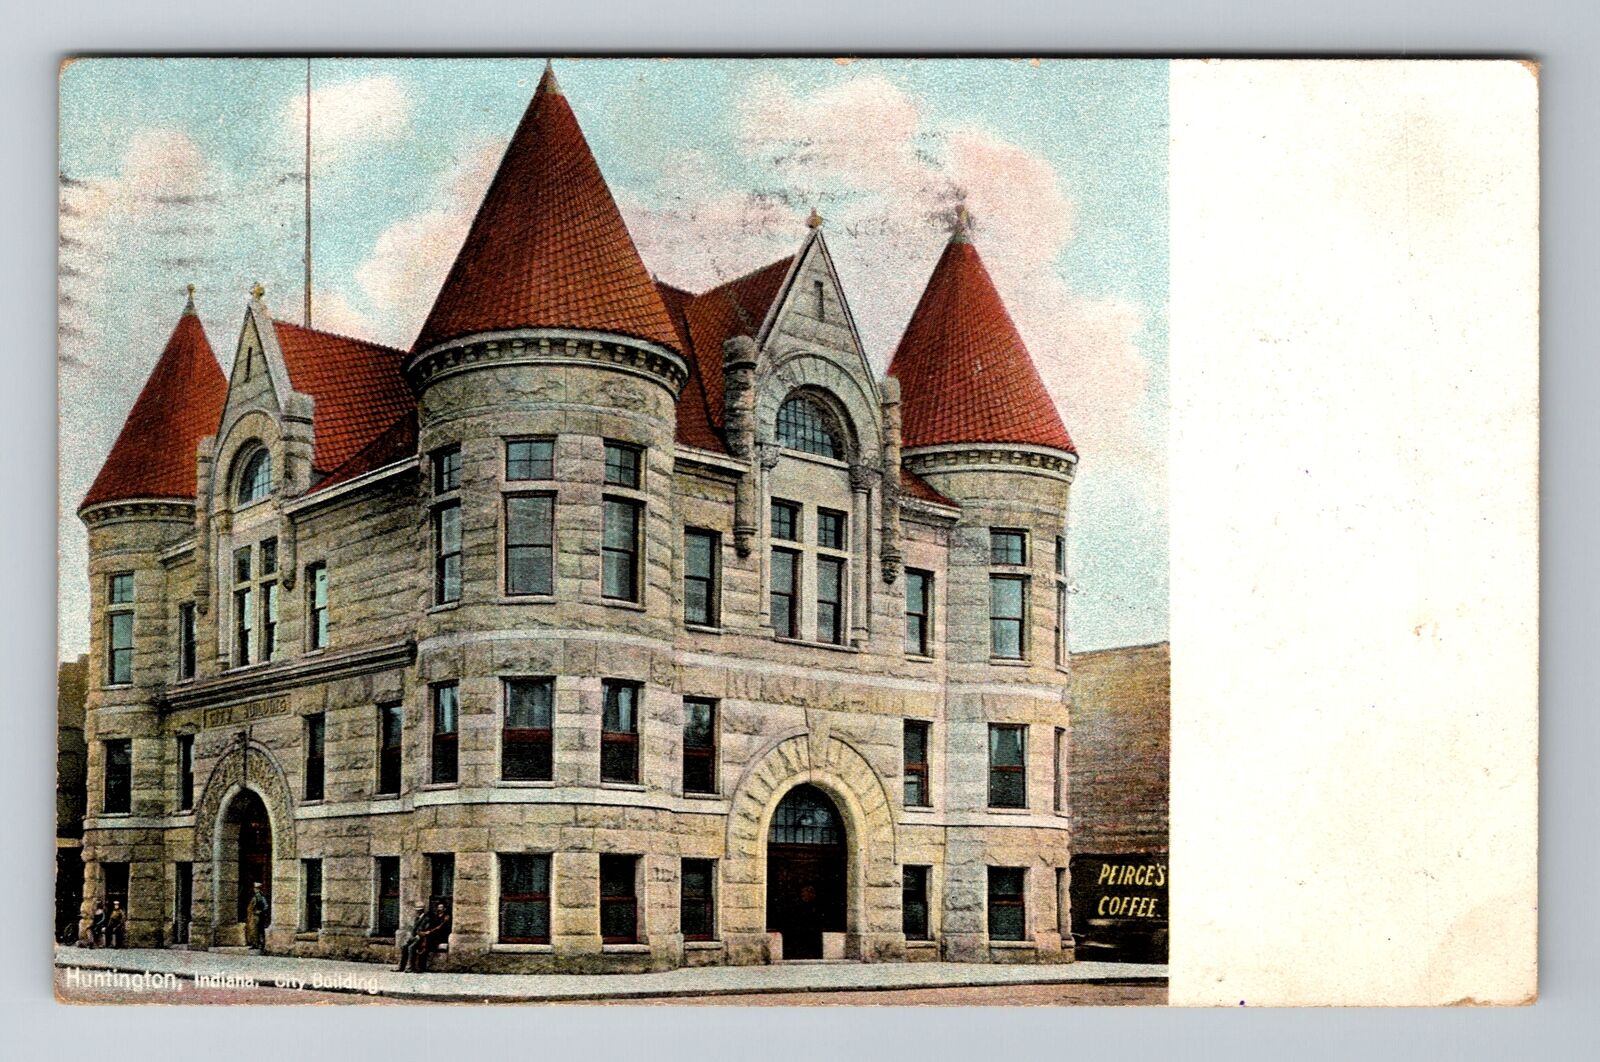 Huntington IN-Indiana, City Building, Antique, Vintage c1908 Postcard